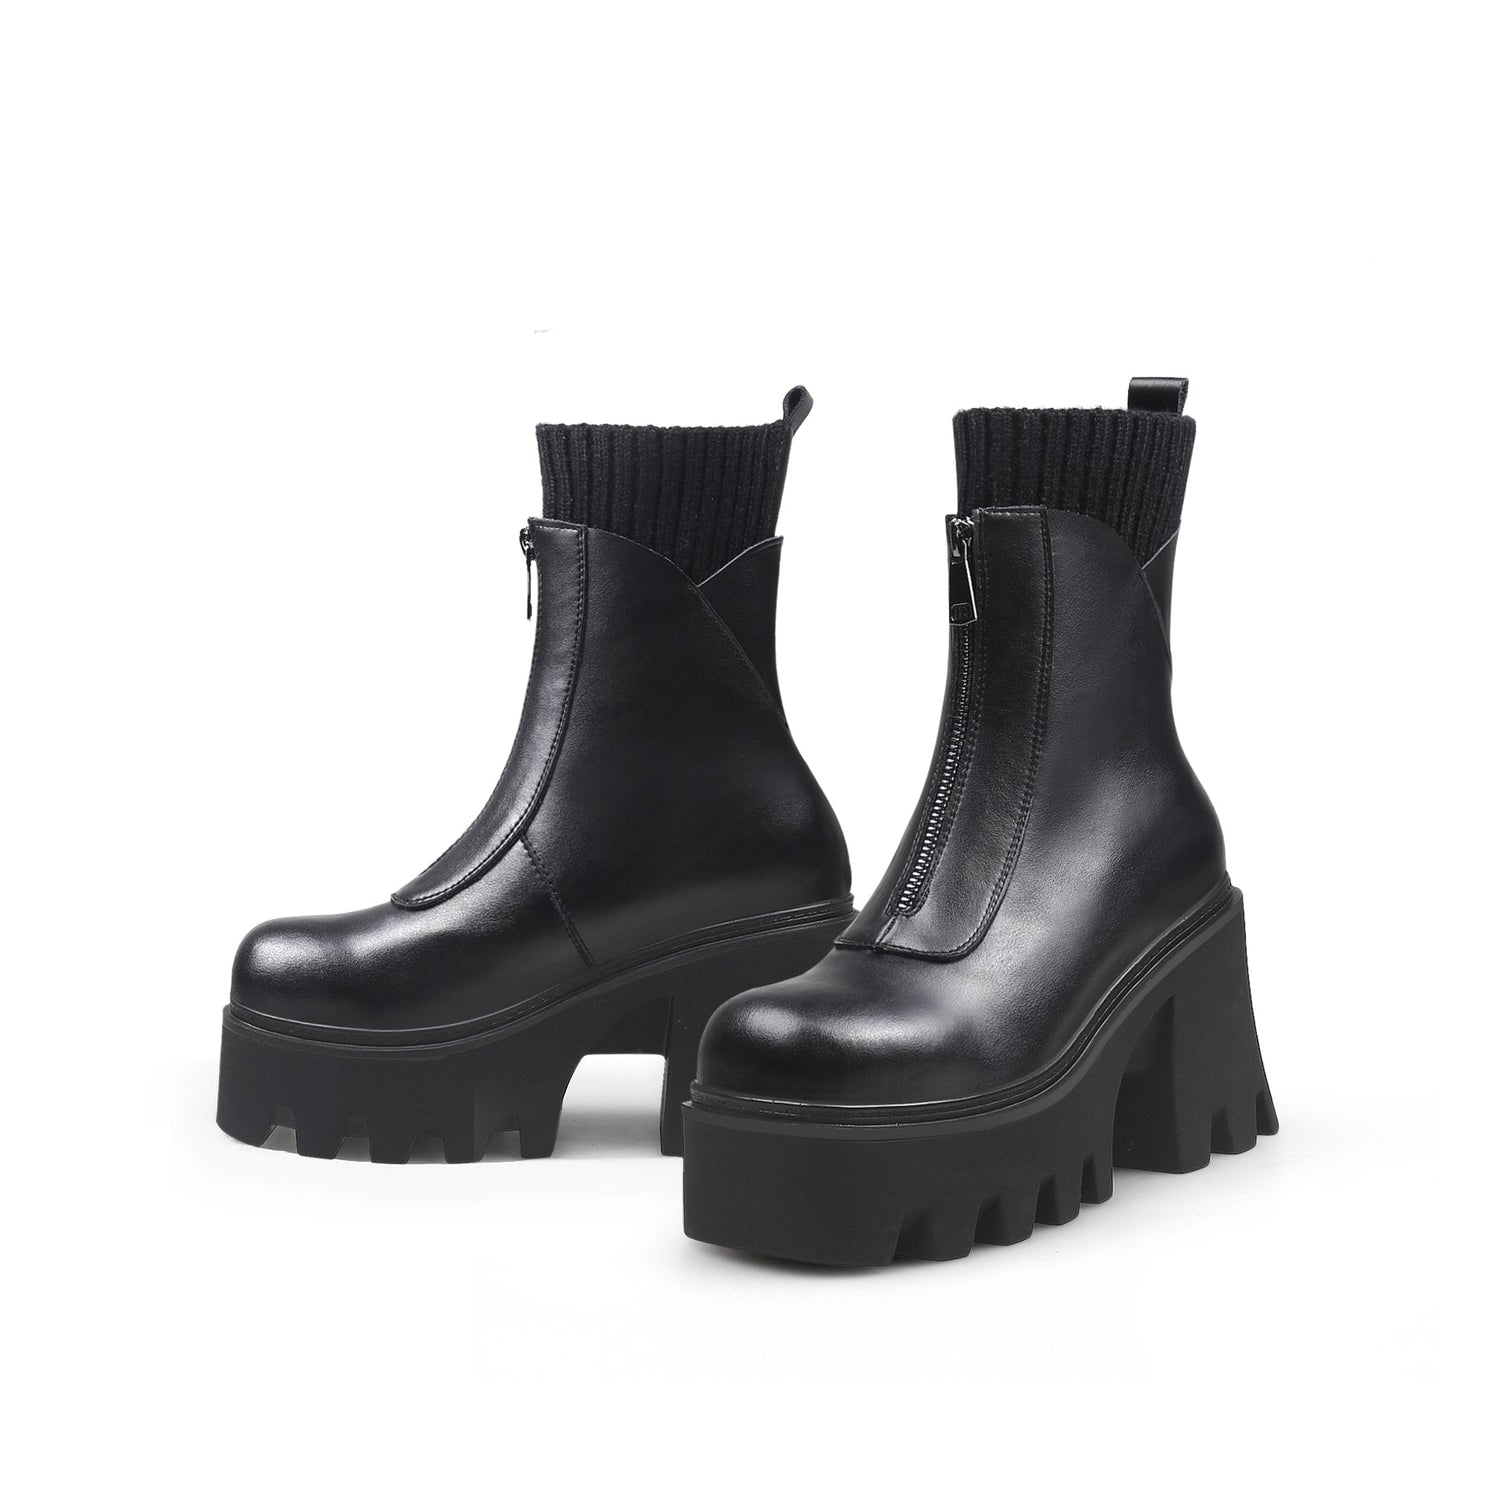 Warm Sock High Platform Black Boots - 0cm